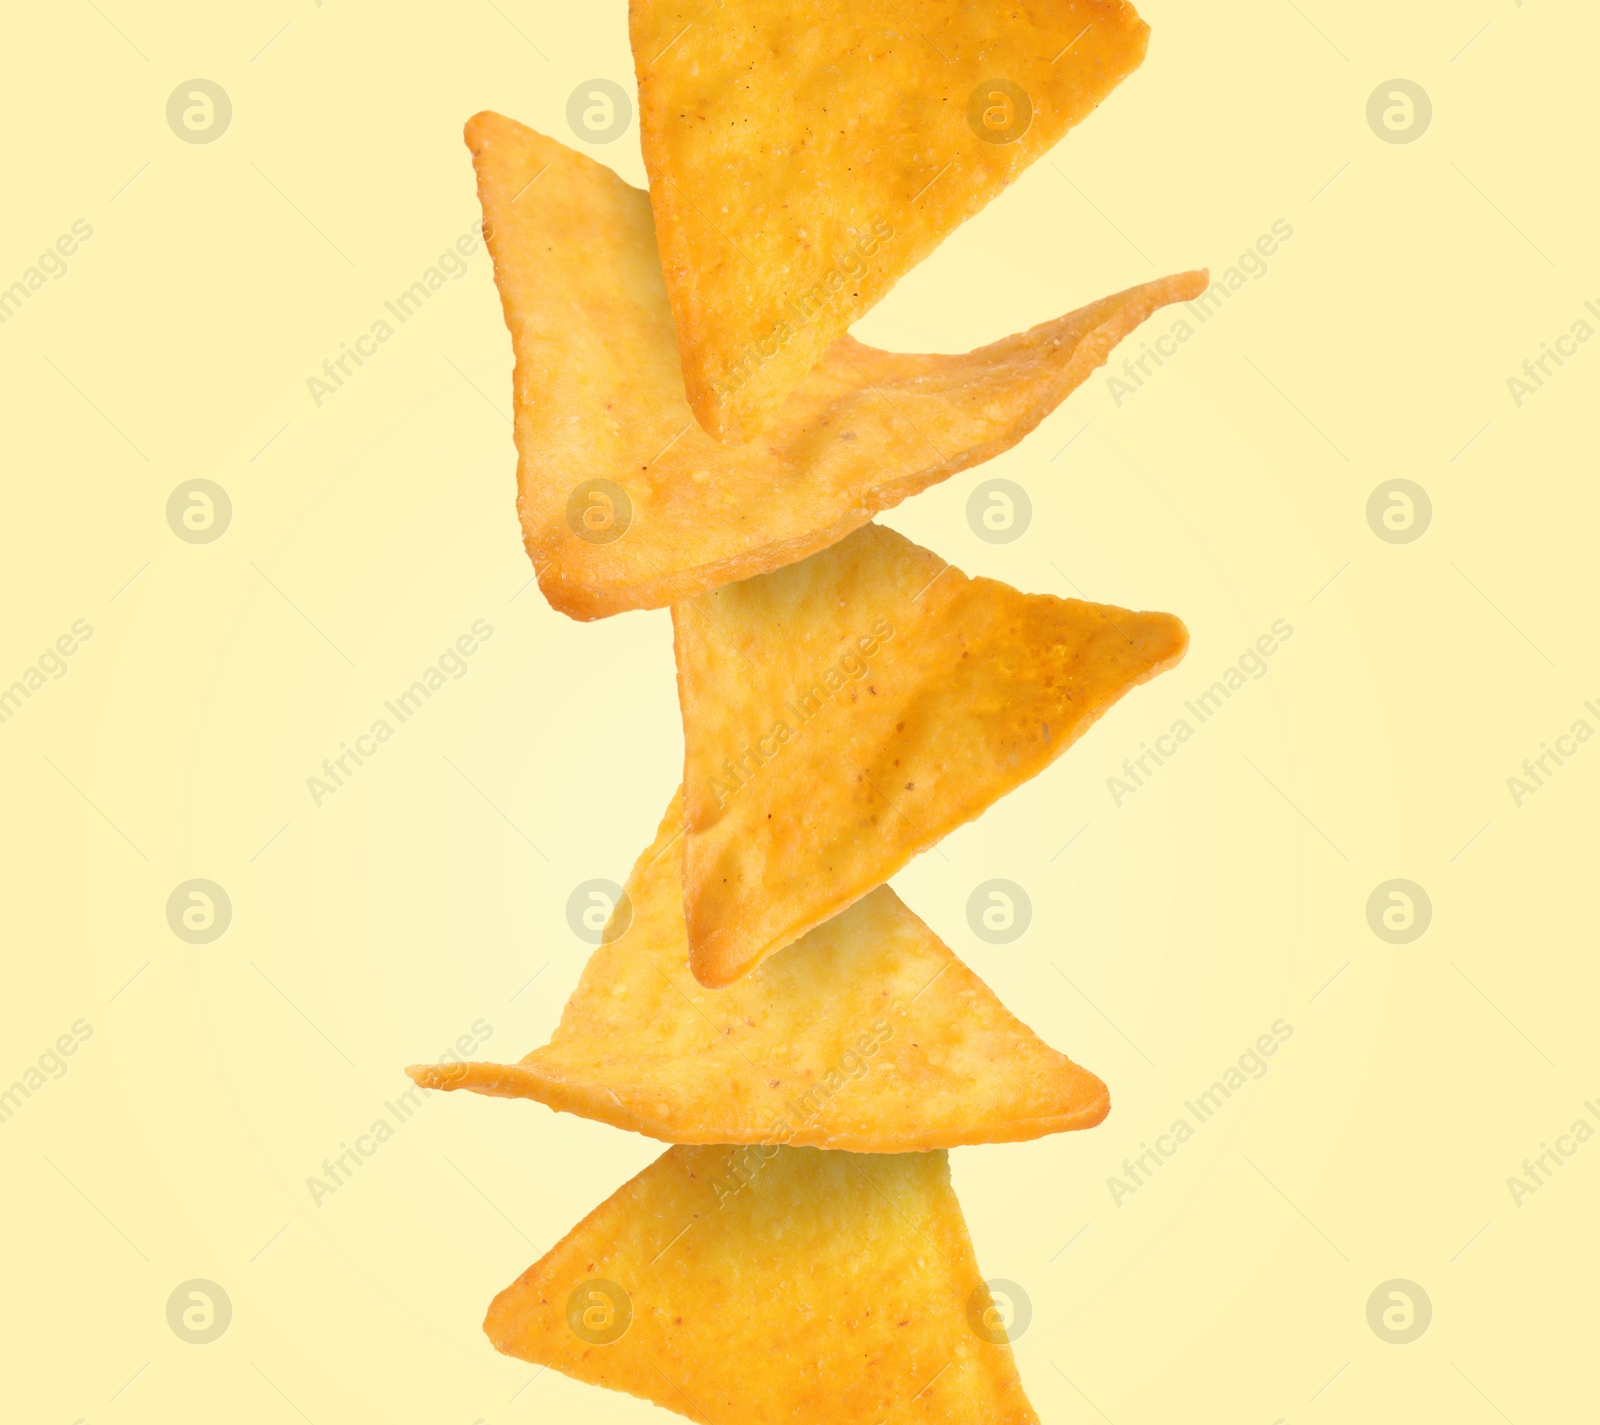 Image of Stack of tasty tortilla chips on beige background